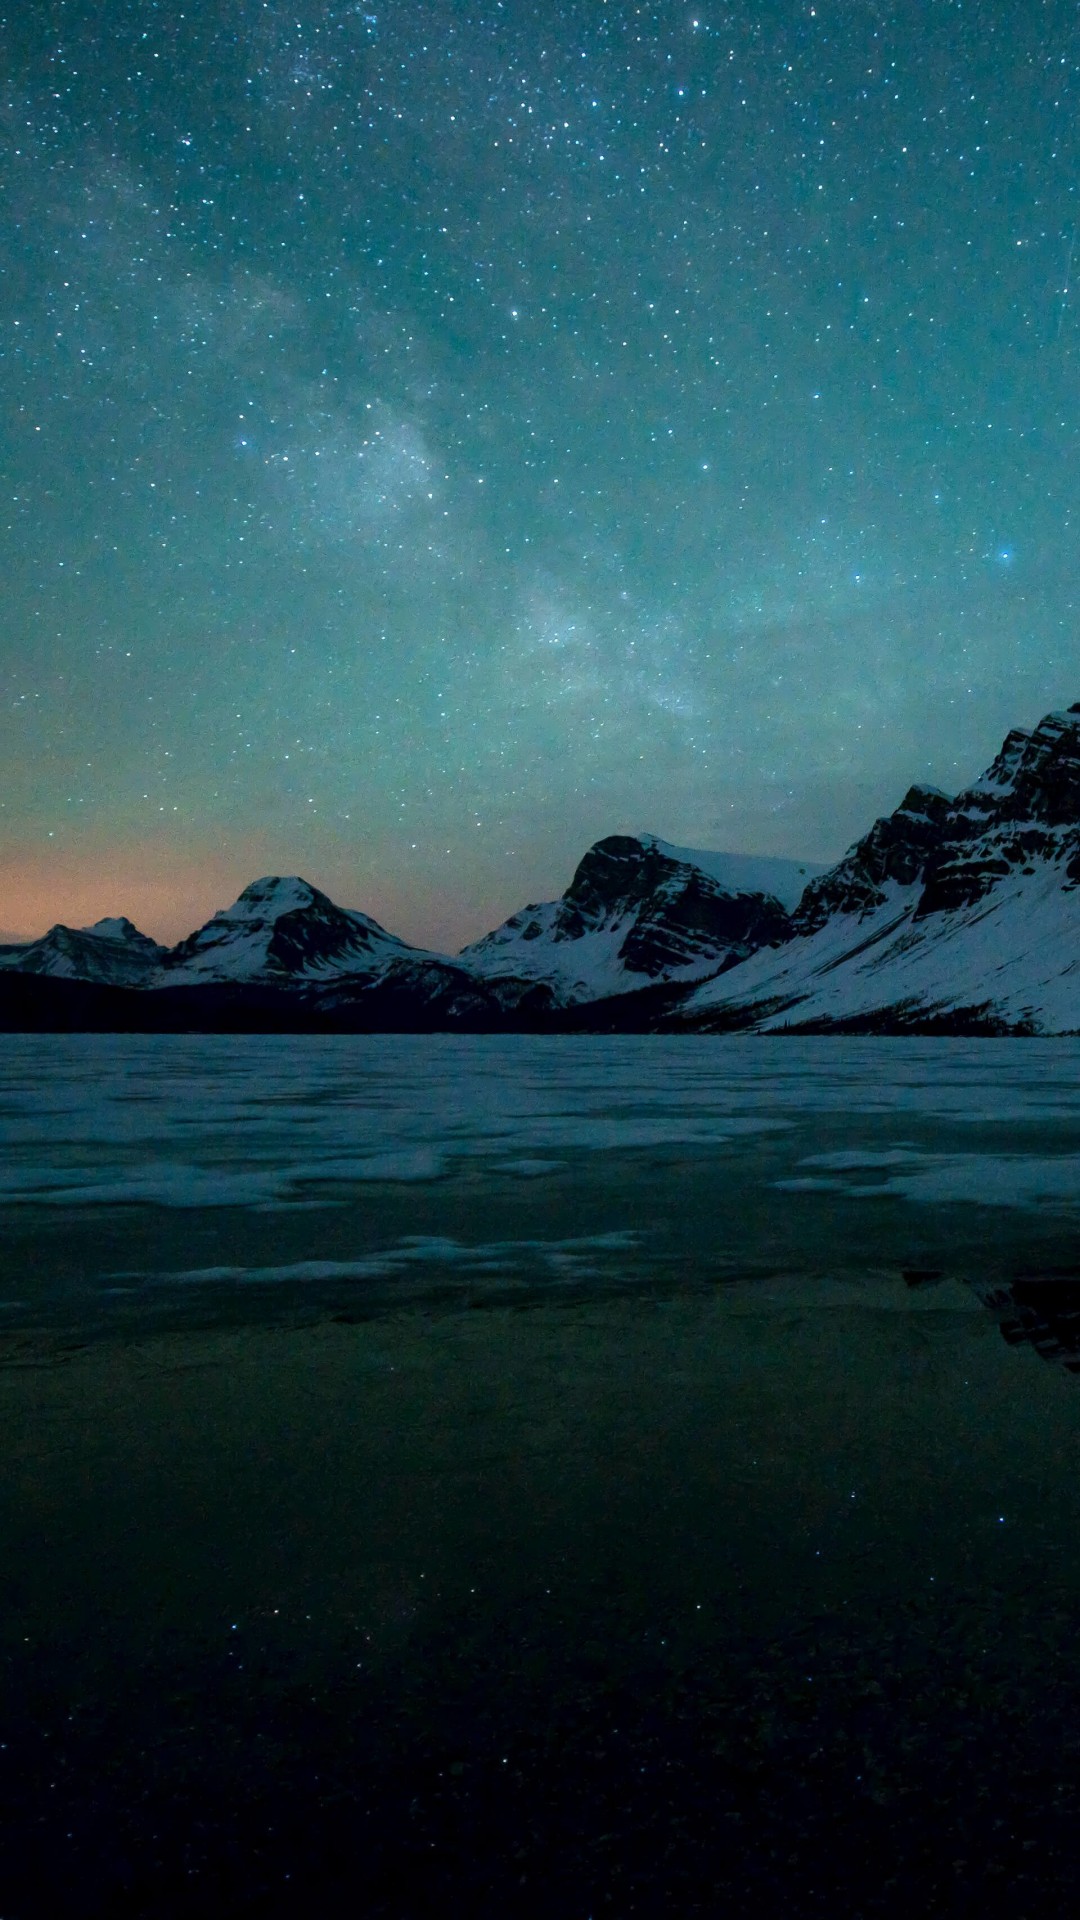 Milky Way over Bow Lake, Alberta, Canada Wallpaper for SAMSUNG Galaxy S4